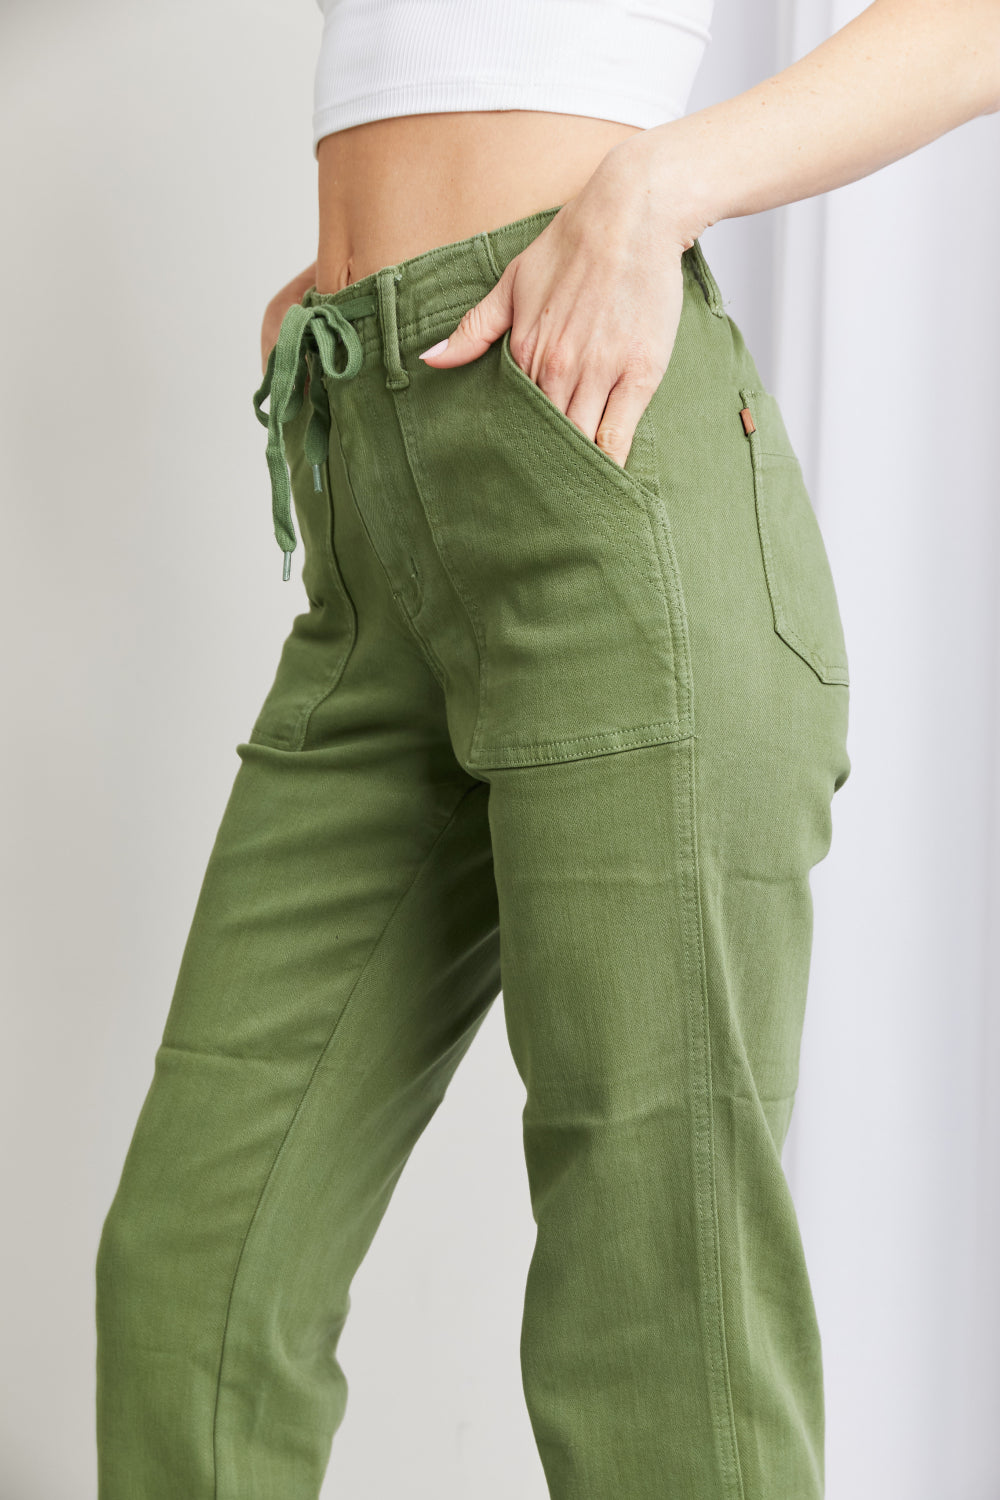 Judy Blue Full Size Drawstring Waist Pocket Jeans - DromedarShop.com Online Boutique